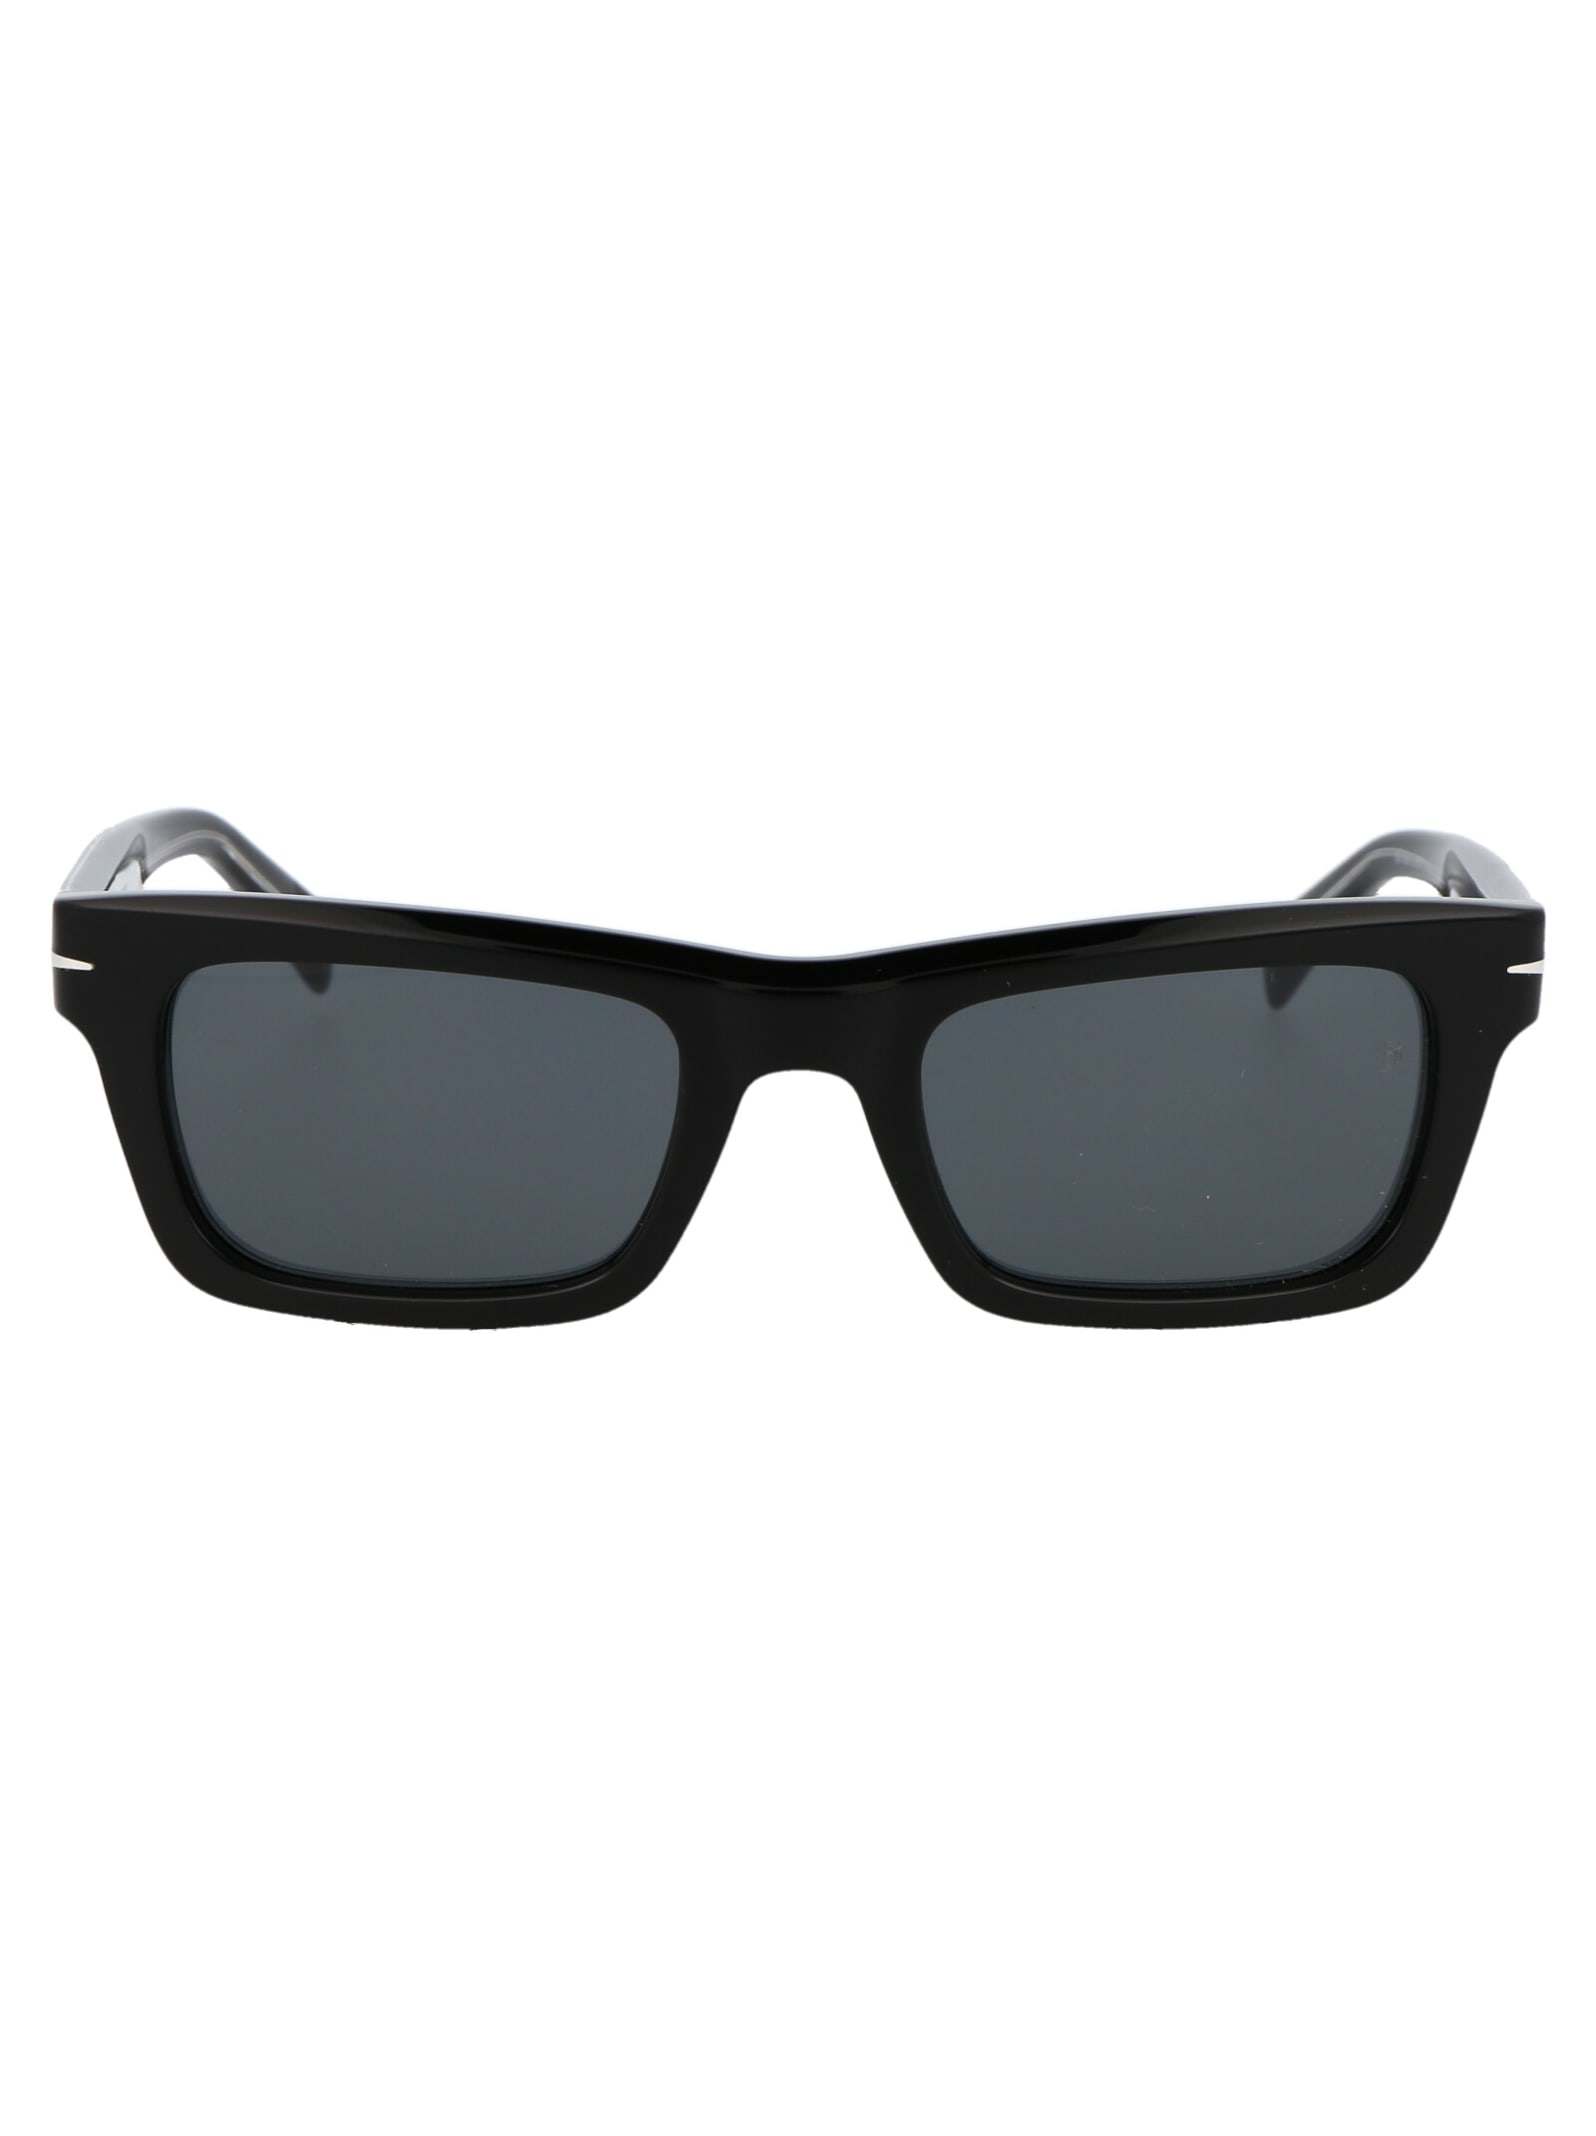 DB Eyewear by David Beckham Db 7091/s Sunglasses